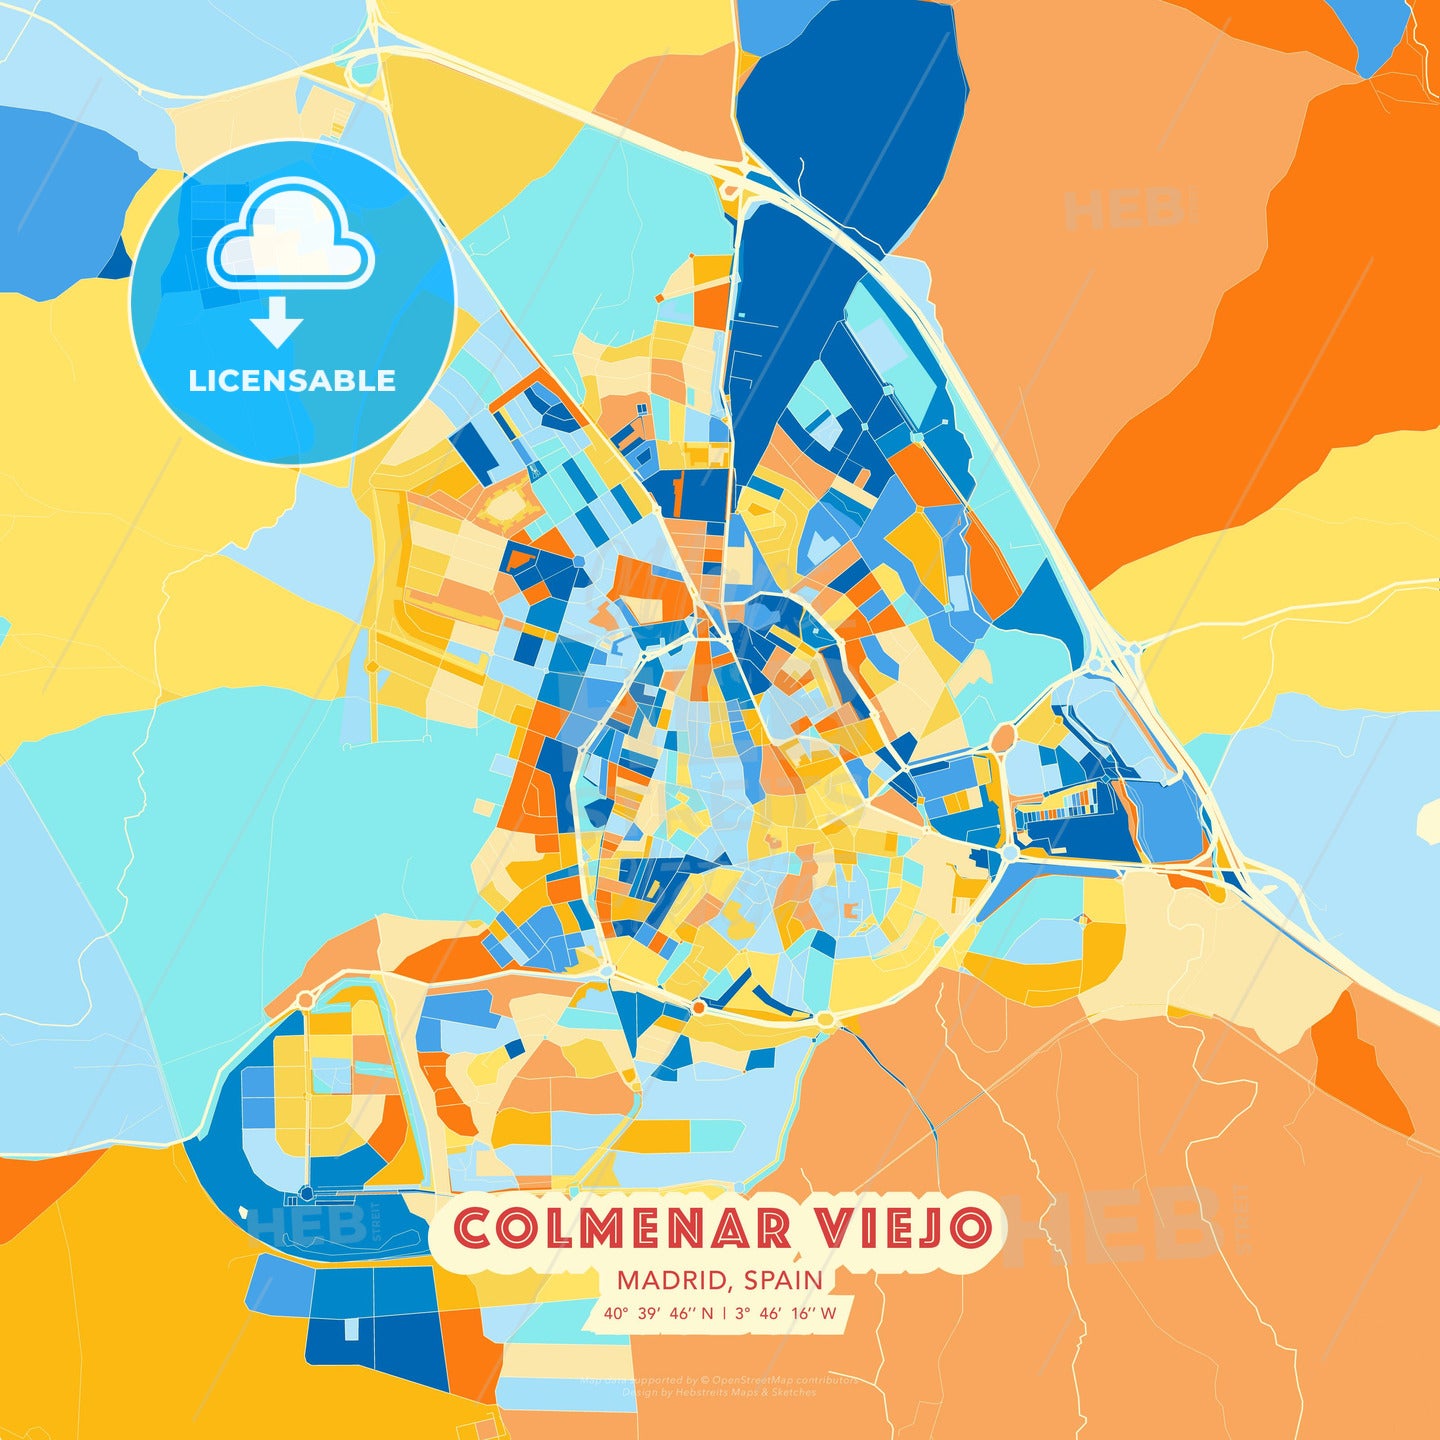 Colmenar Viejo, Madrid, Spain, map - HEBSTREITS Sketches